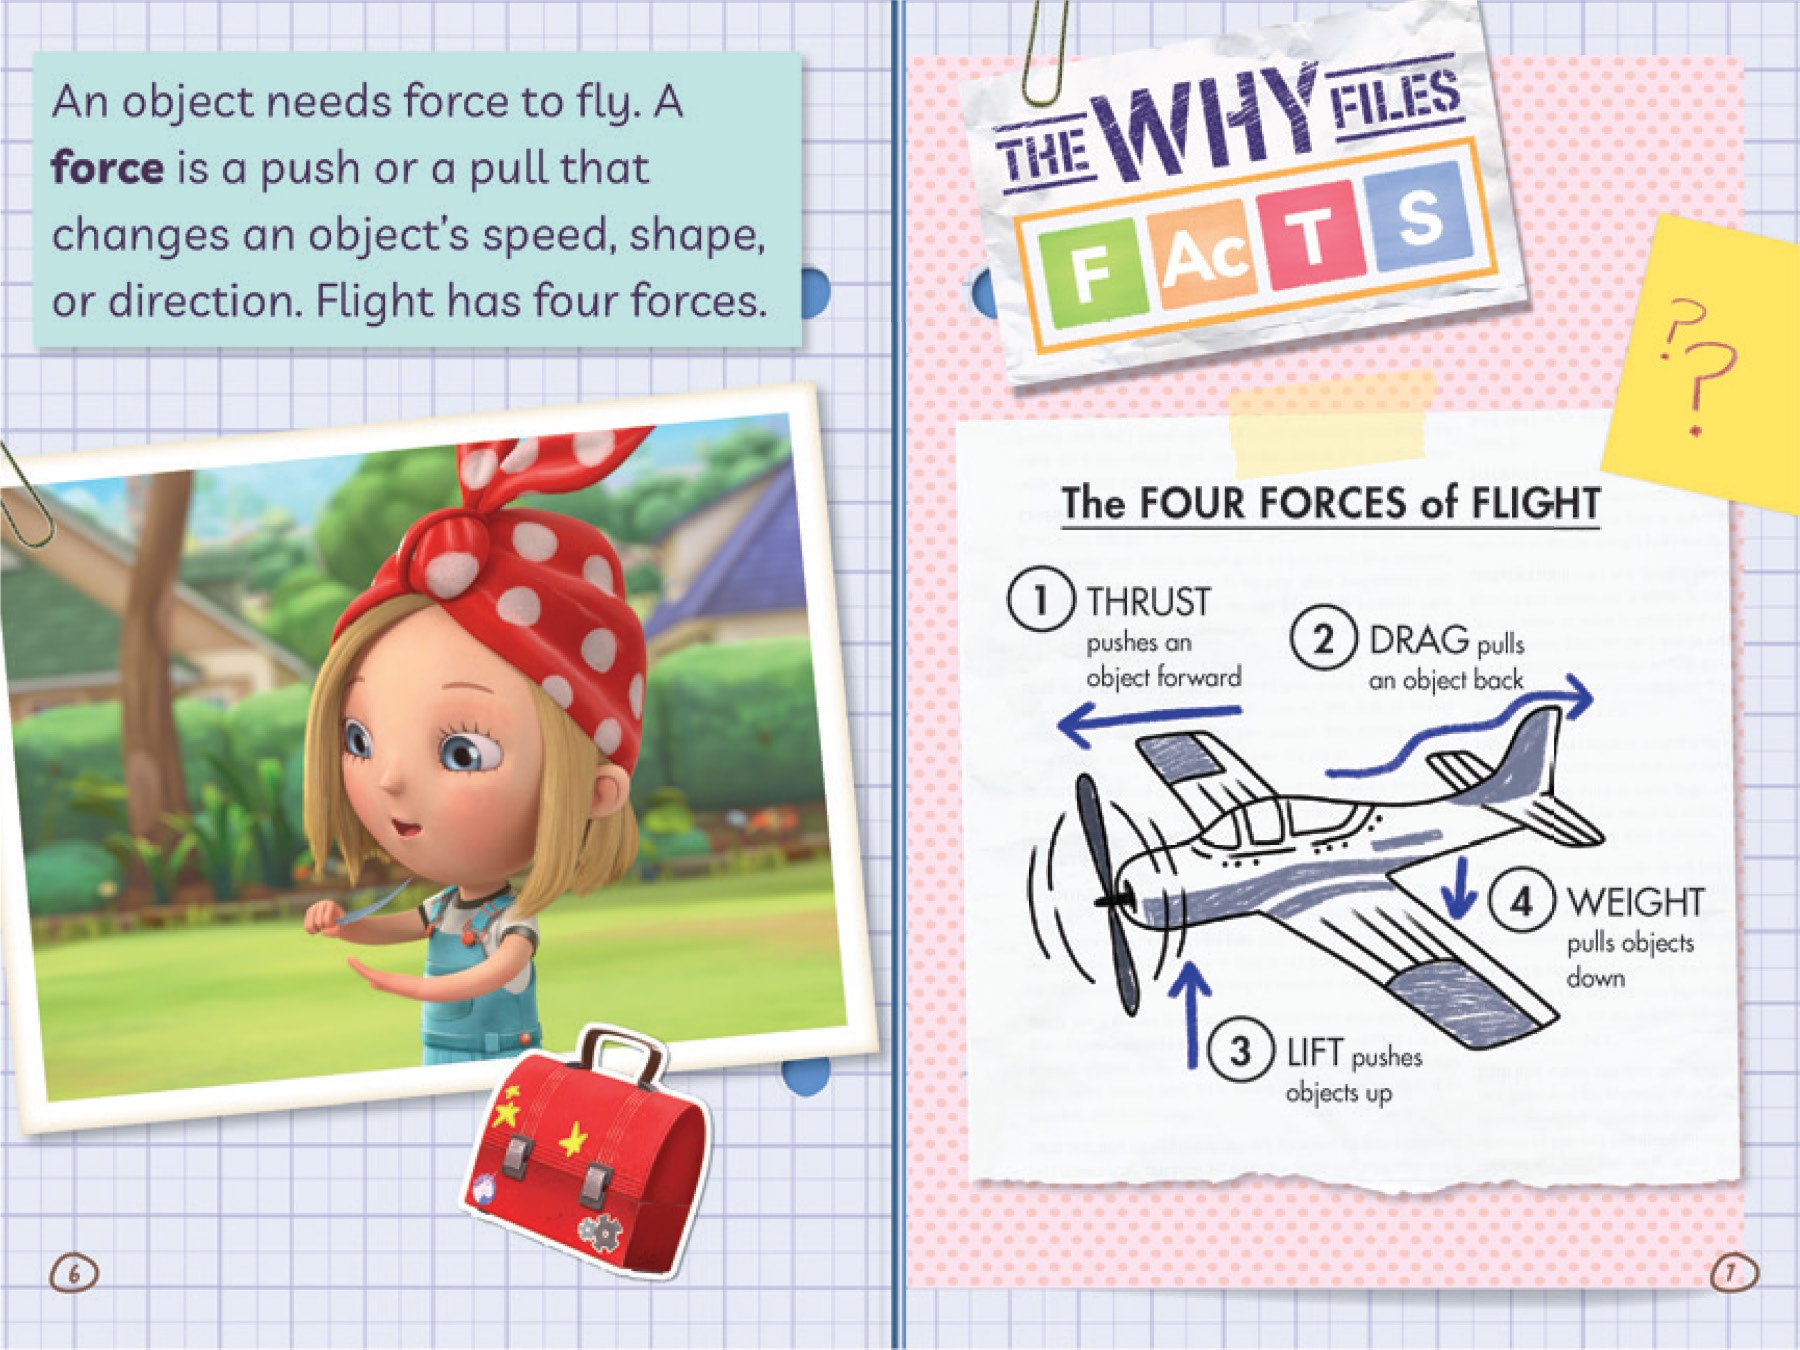 Ada Twist, Scientist: Why Files #1: Exploring Flight!